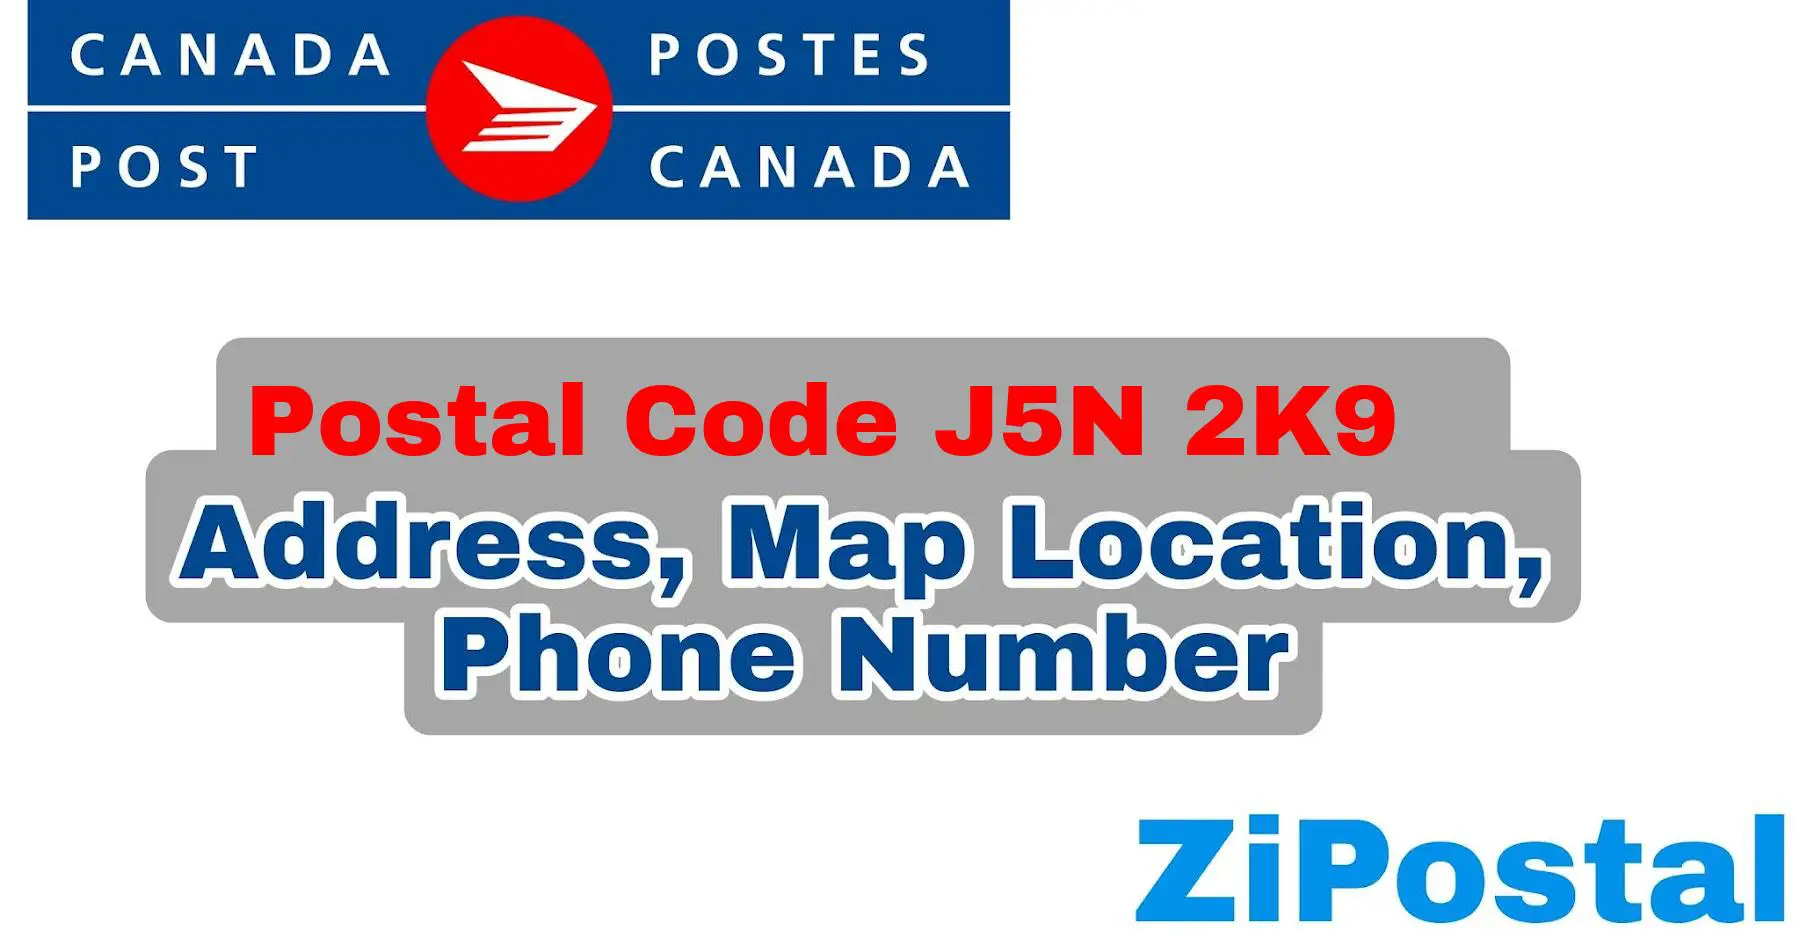 Postal Code J5N 2K9 Address Map Location and Phone Number